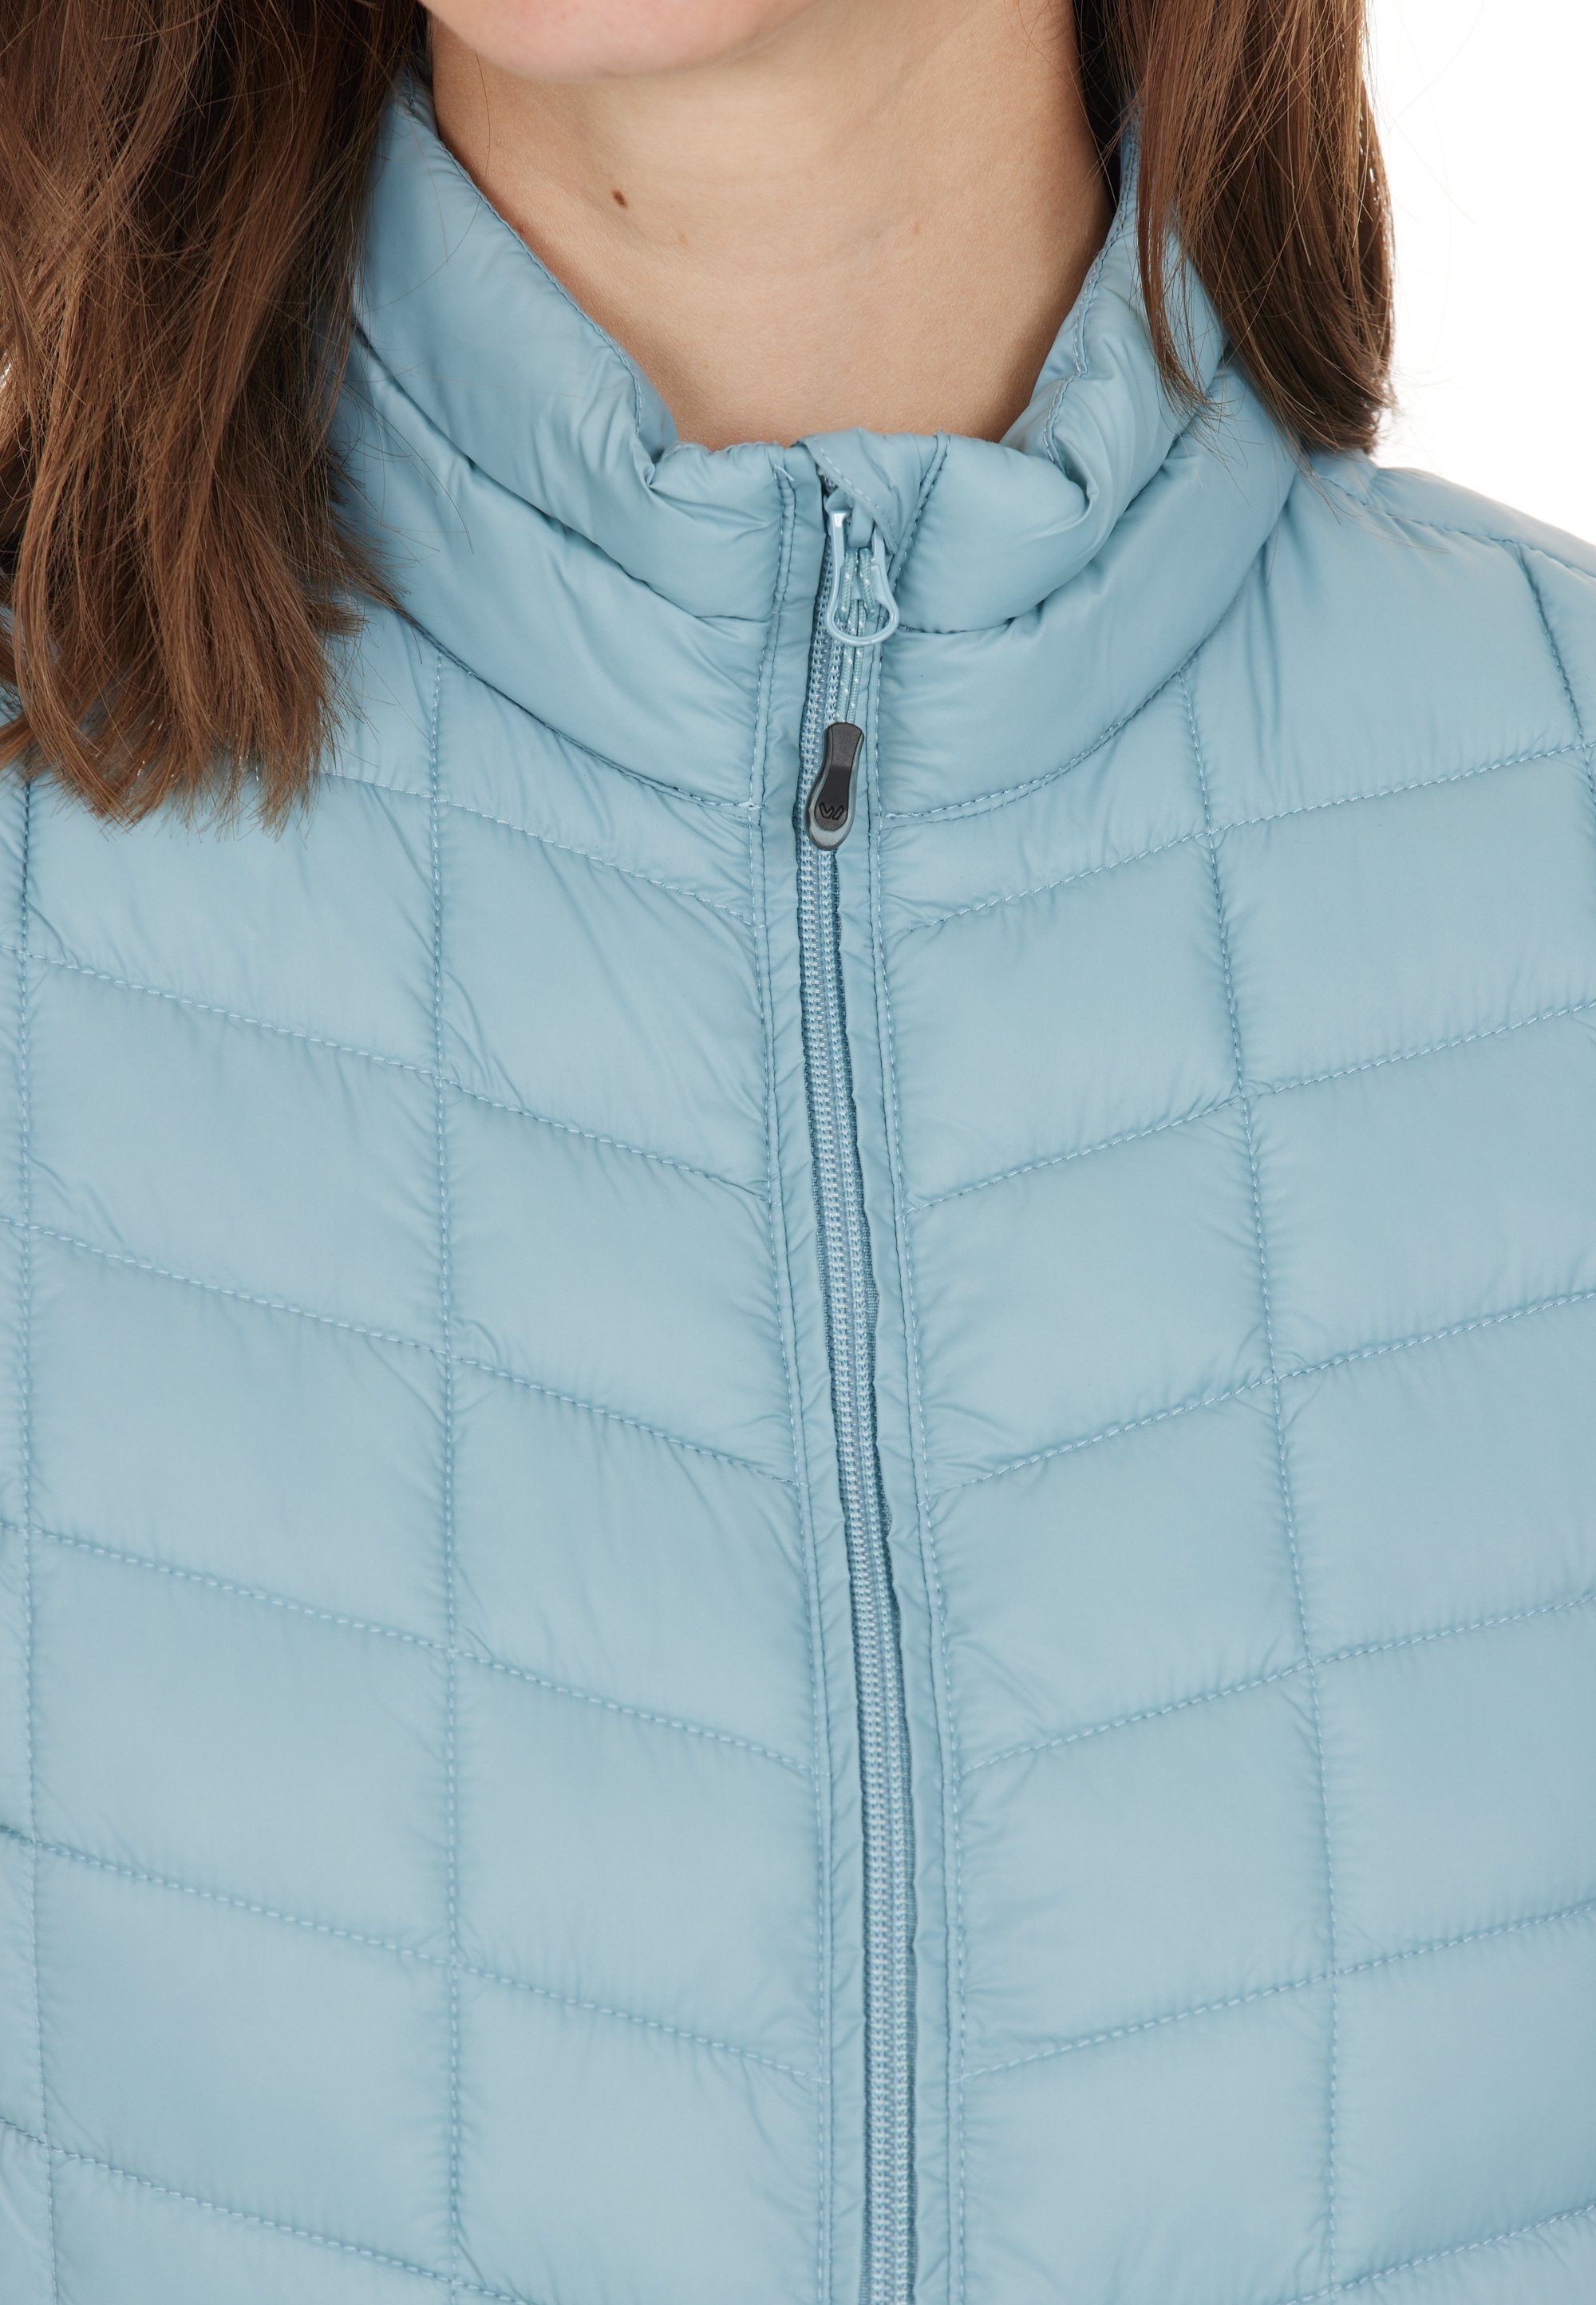 WHISTLER Outdoorjacke frostblau Kate in tollem Stepp-Design